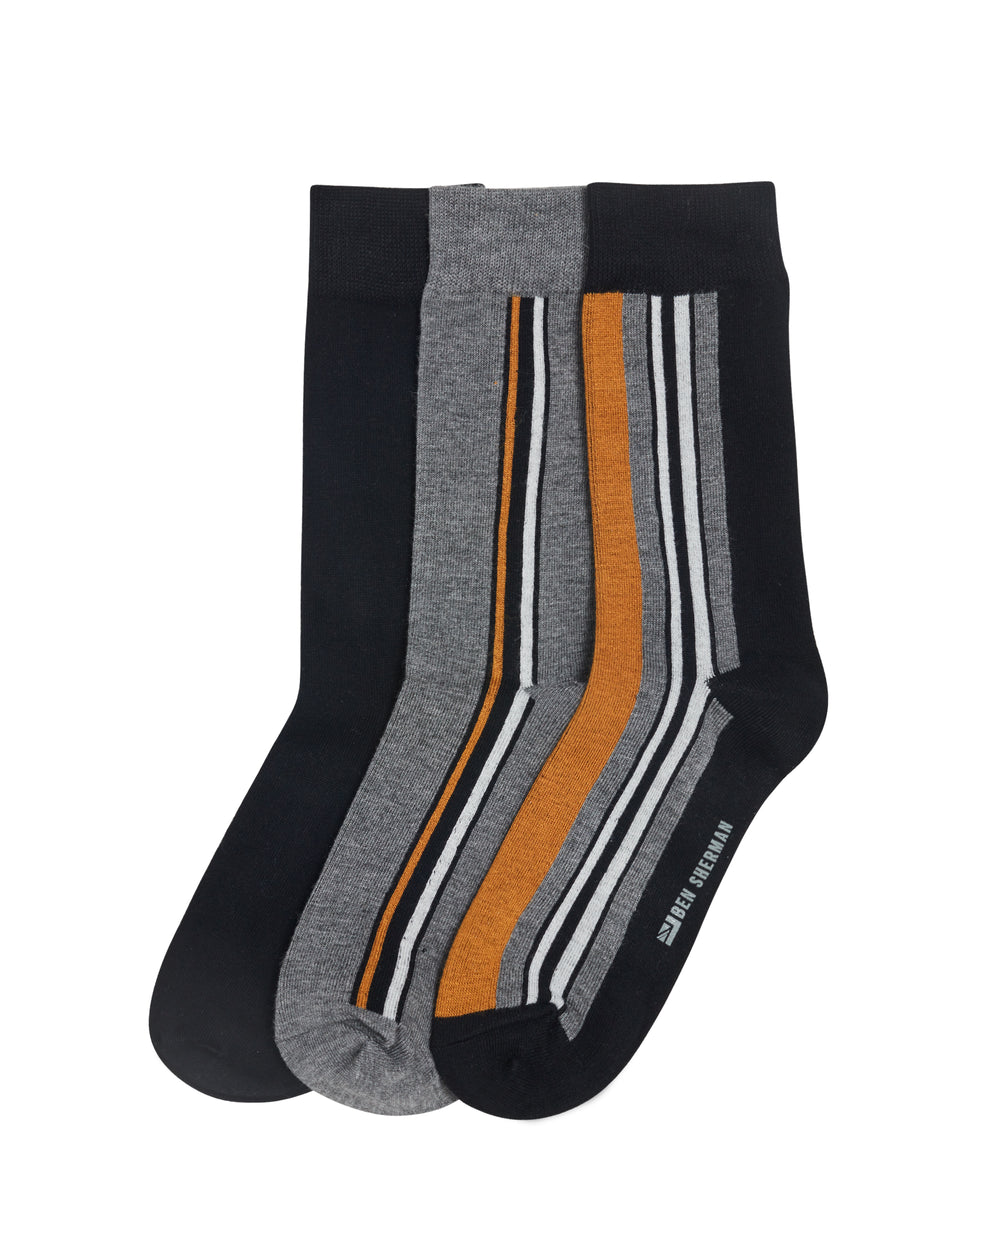 Grundy Men's 3-Pack Socks - Grey/Black/Gold Stripe